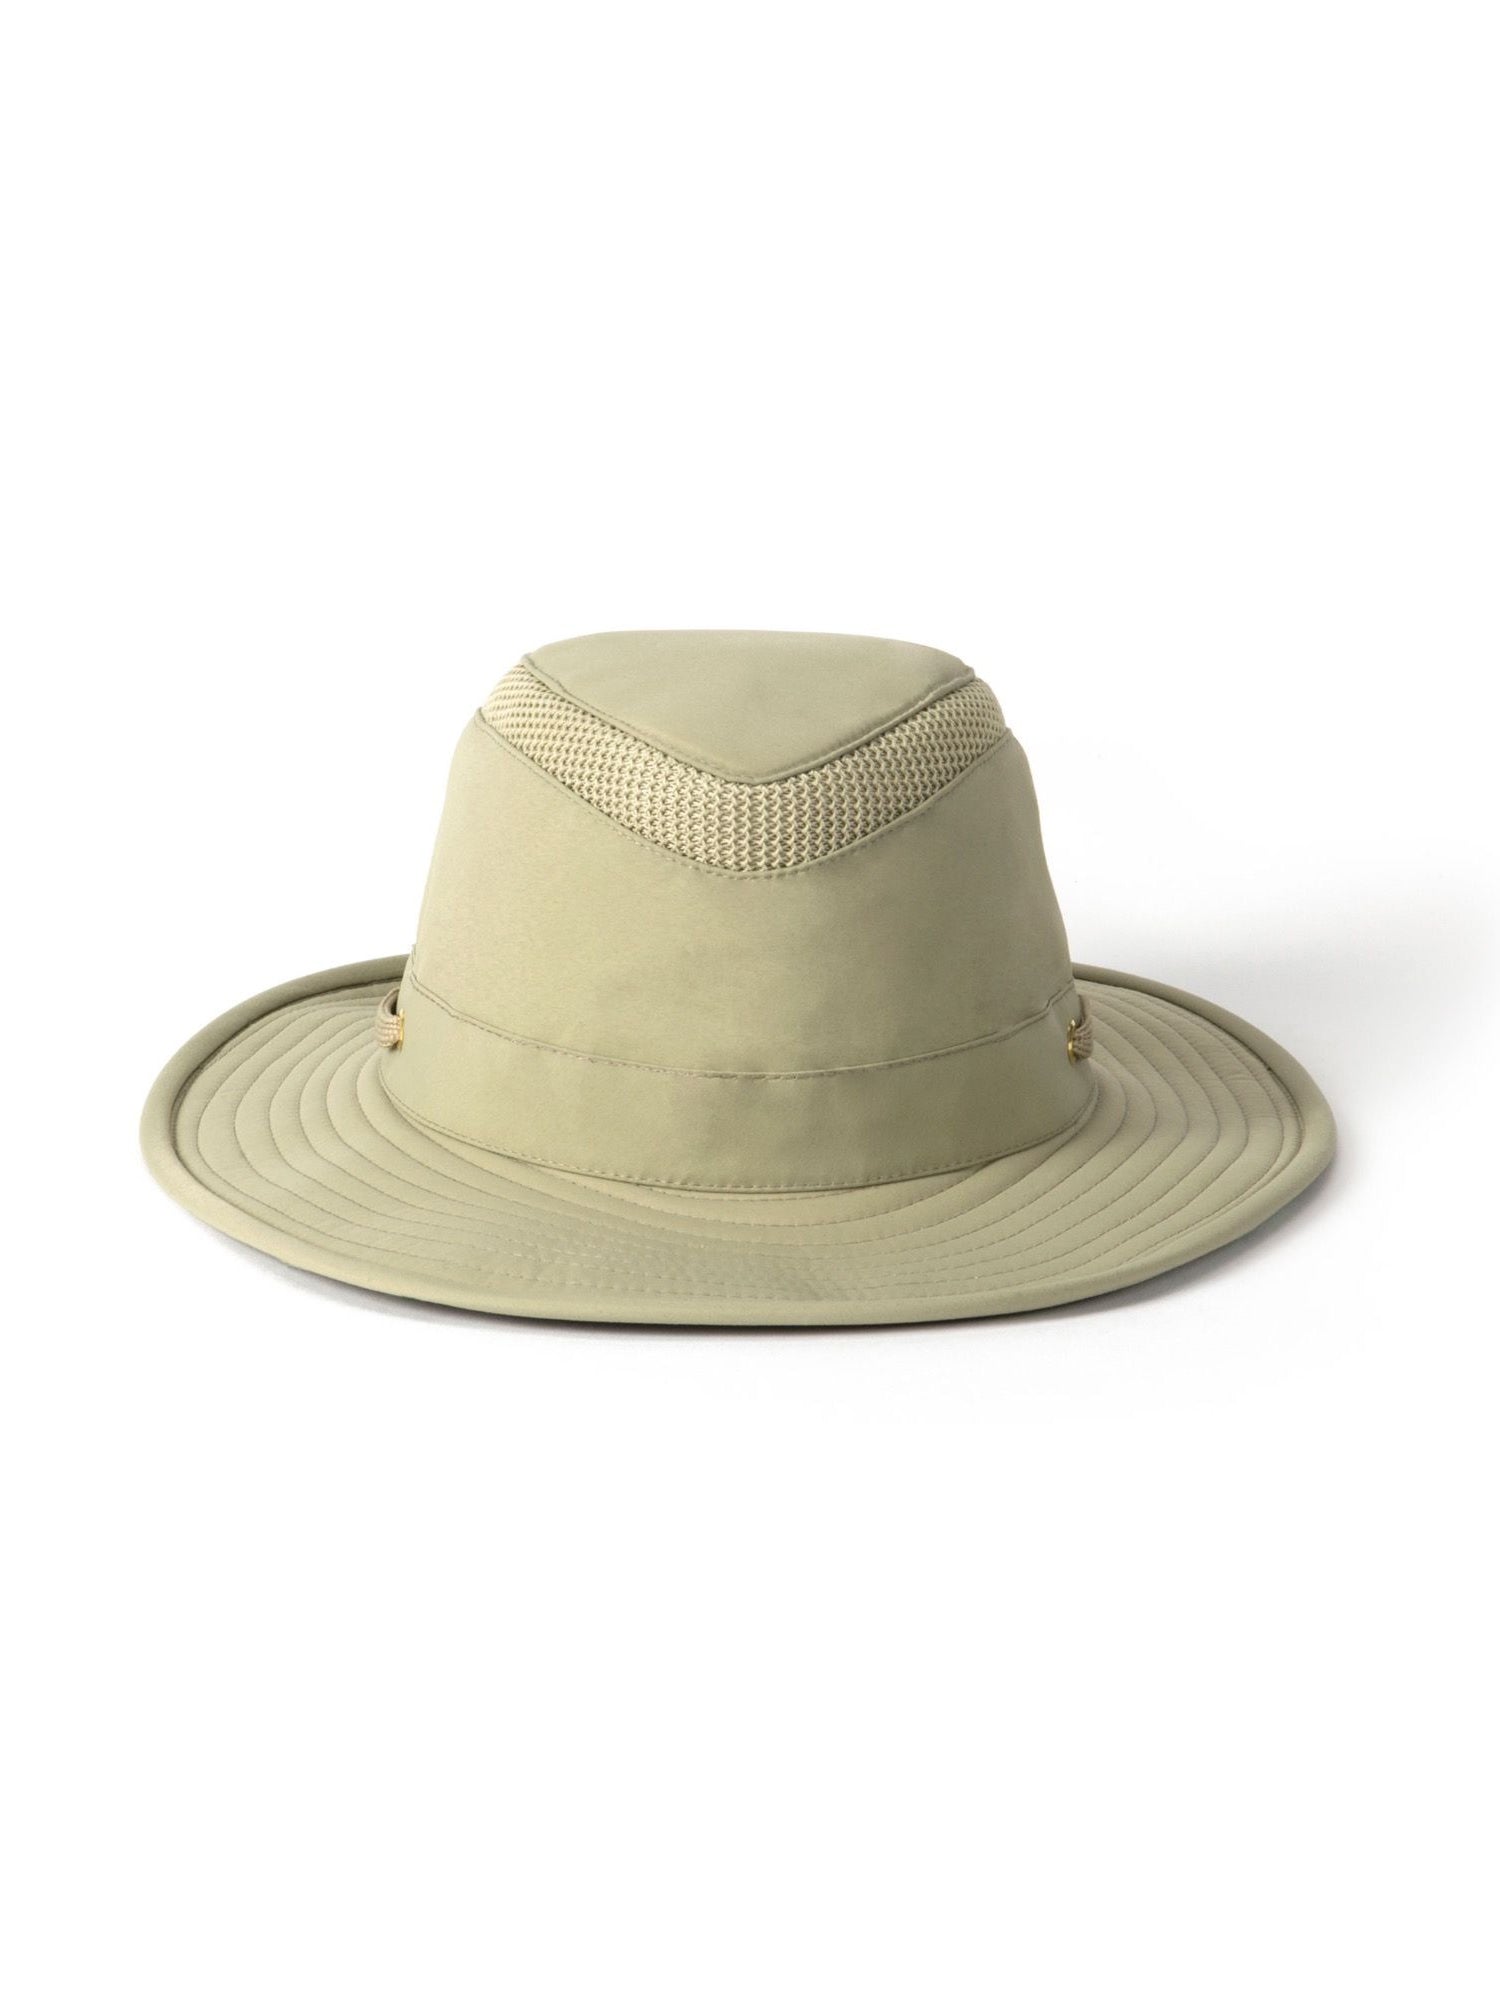 Tilley Airflow Broad Brim Hat in Khaki (Khol) - 0